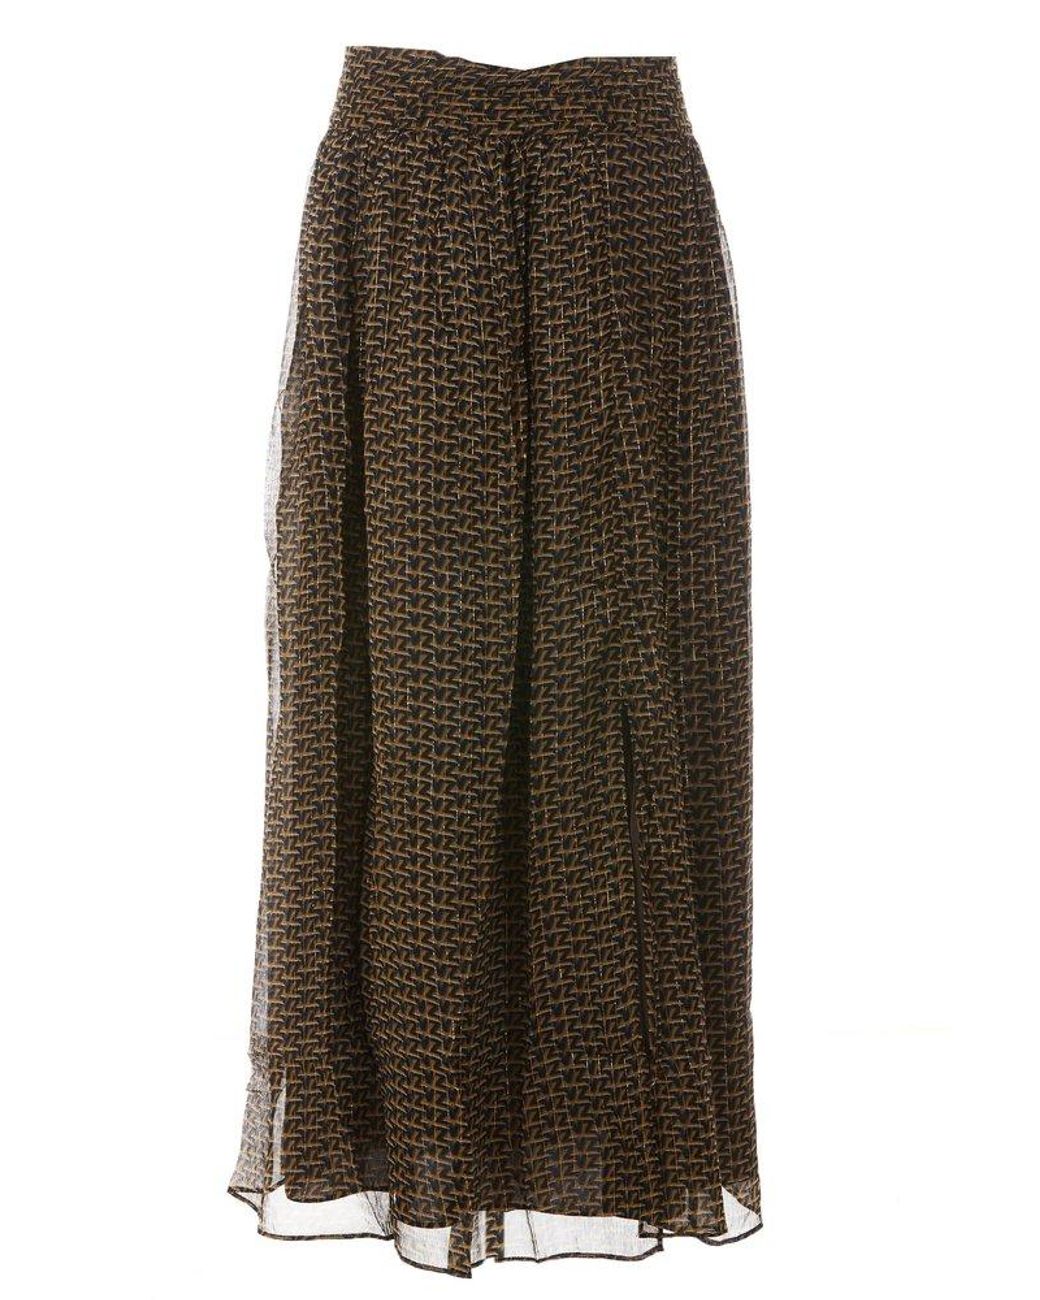 Zadig & Voltaire Jade Lurex Skirt in Brown | Lyst